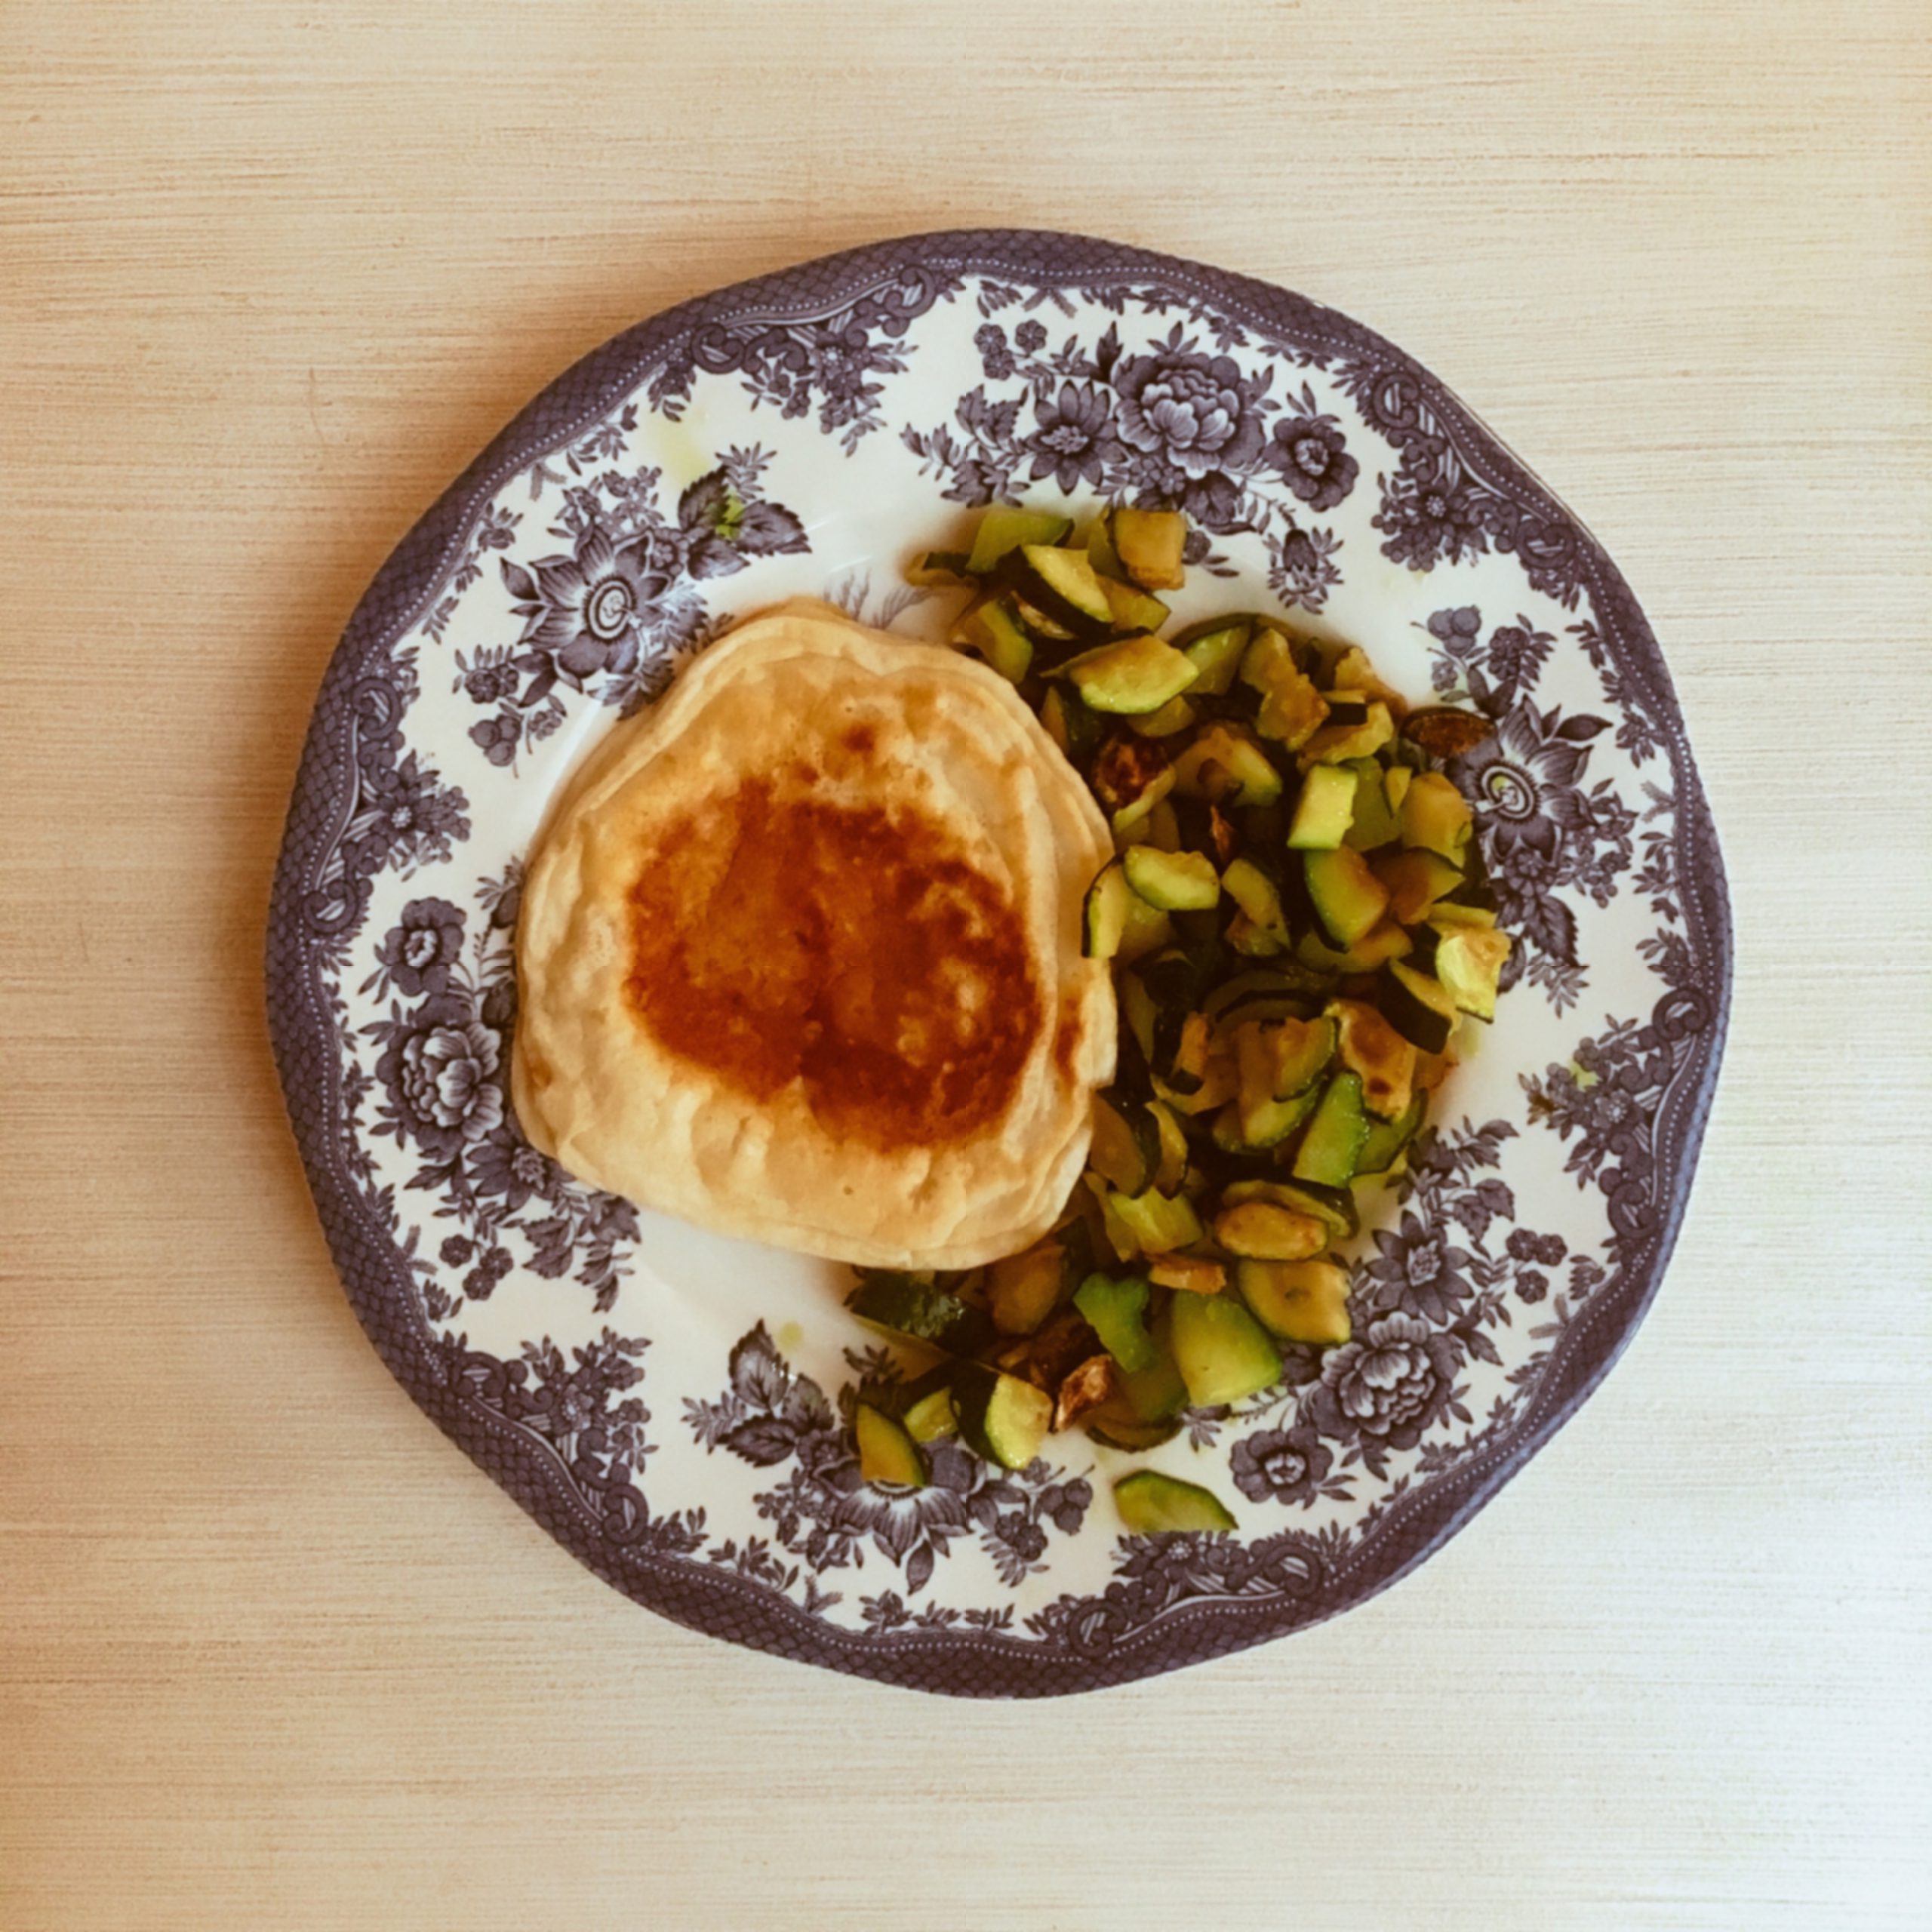 Dieta chetogenica omelette e zucchine